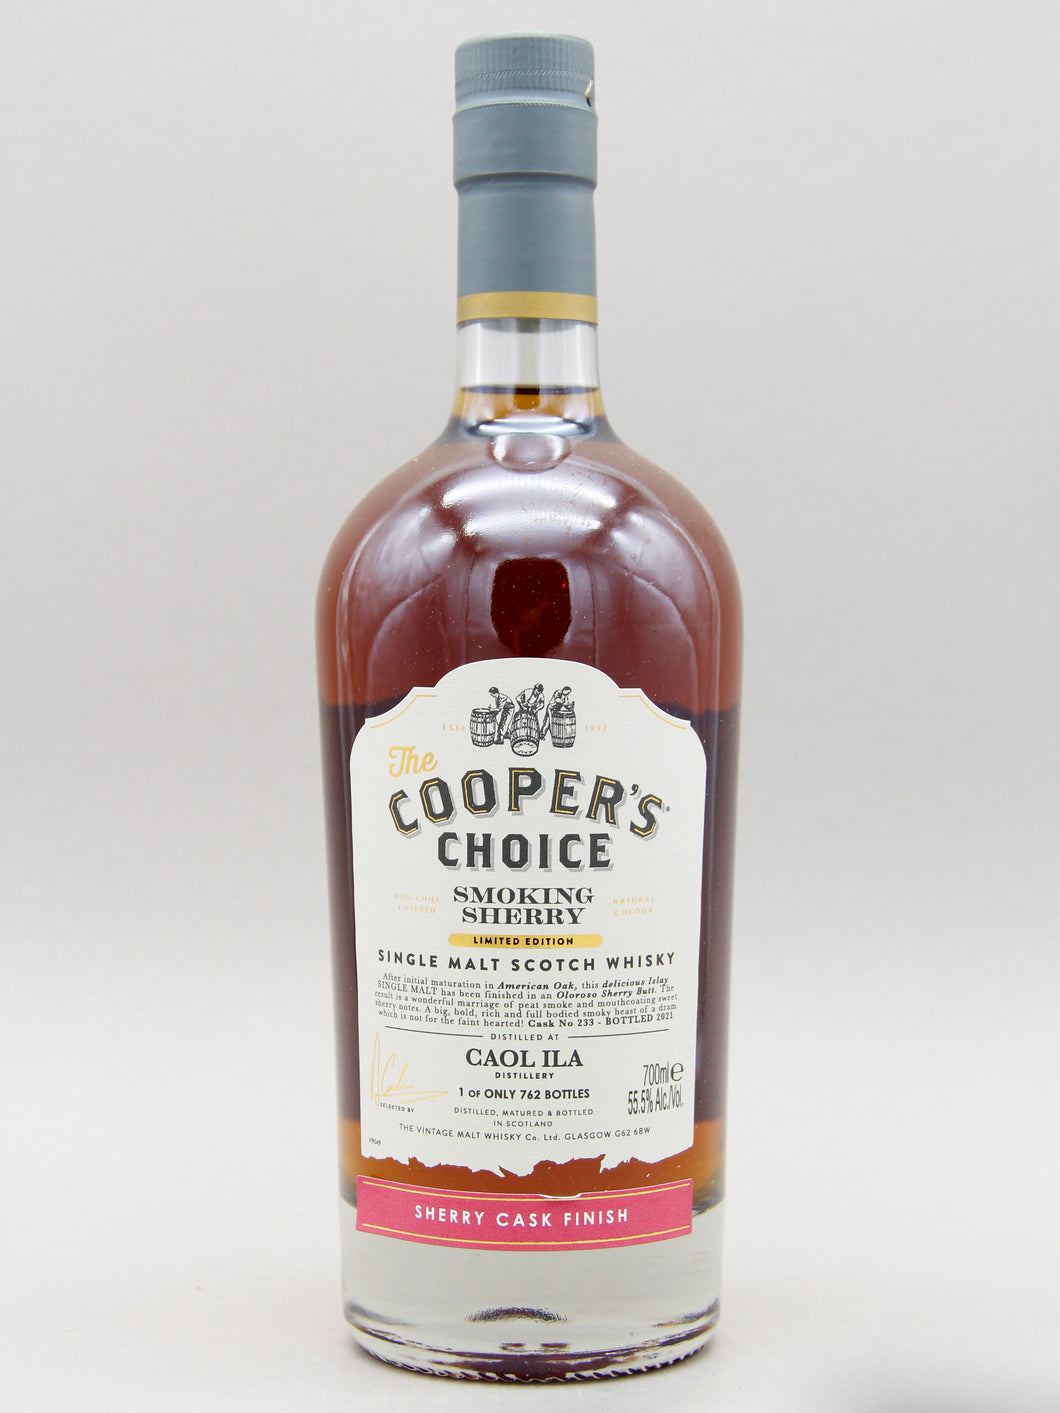 Cooper's Choice, Smoking Sherry, Caol Ila, Sherry Cask Finish, Single Malt Scotch Whisky (55.5%, 70cl)